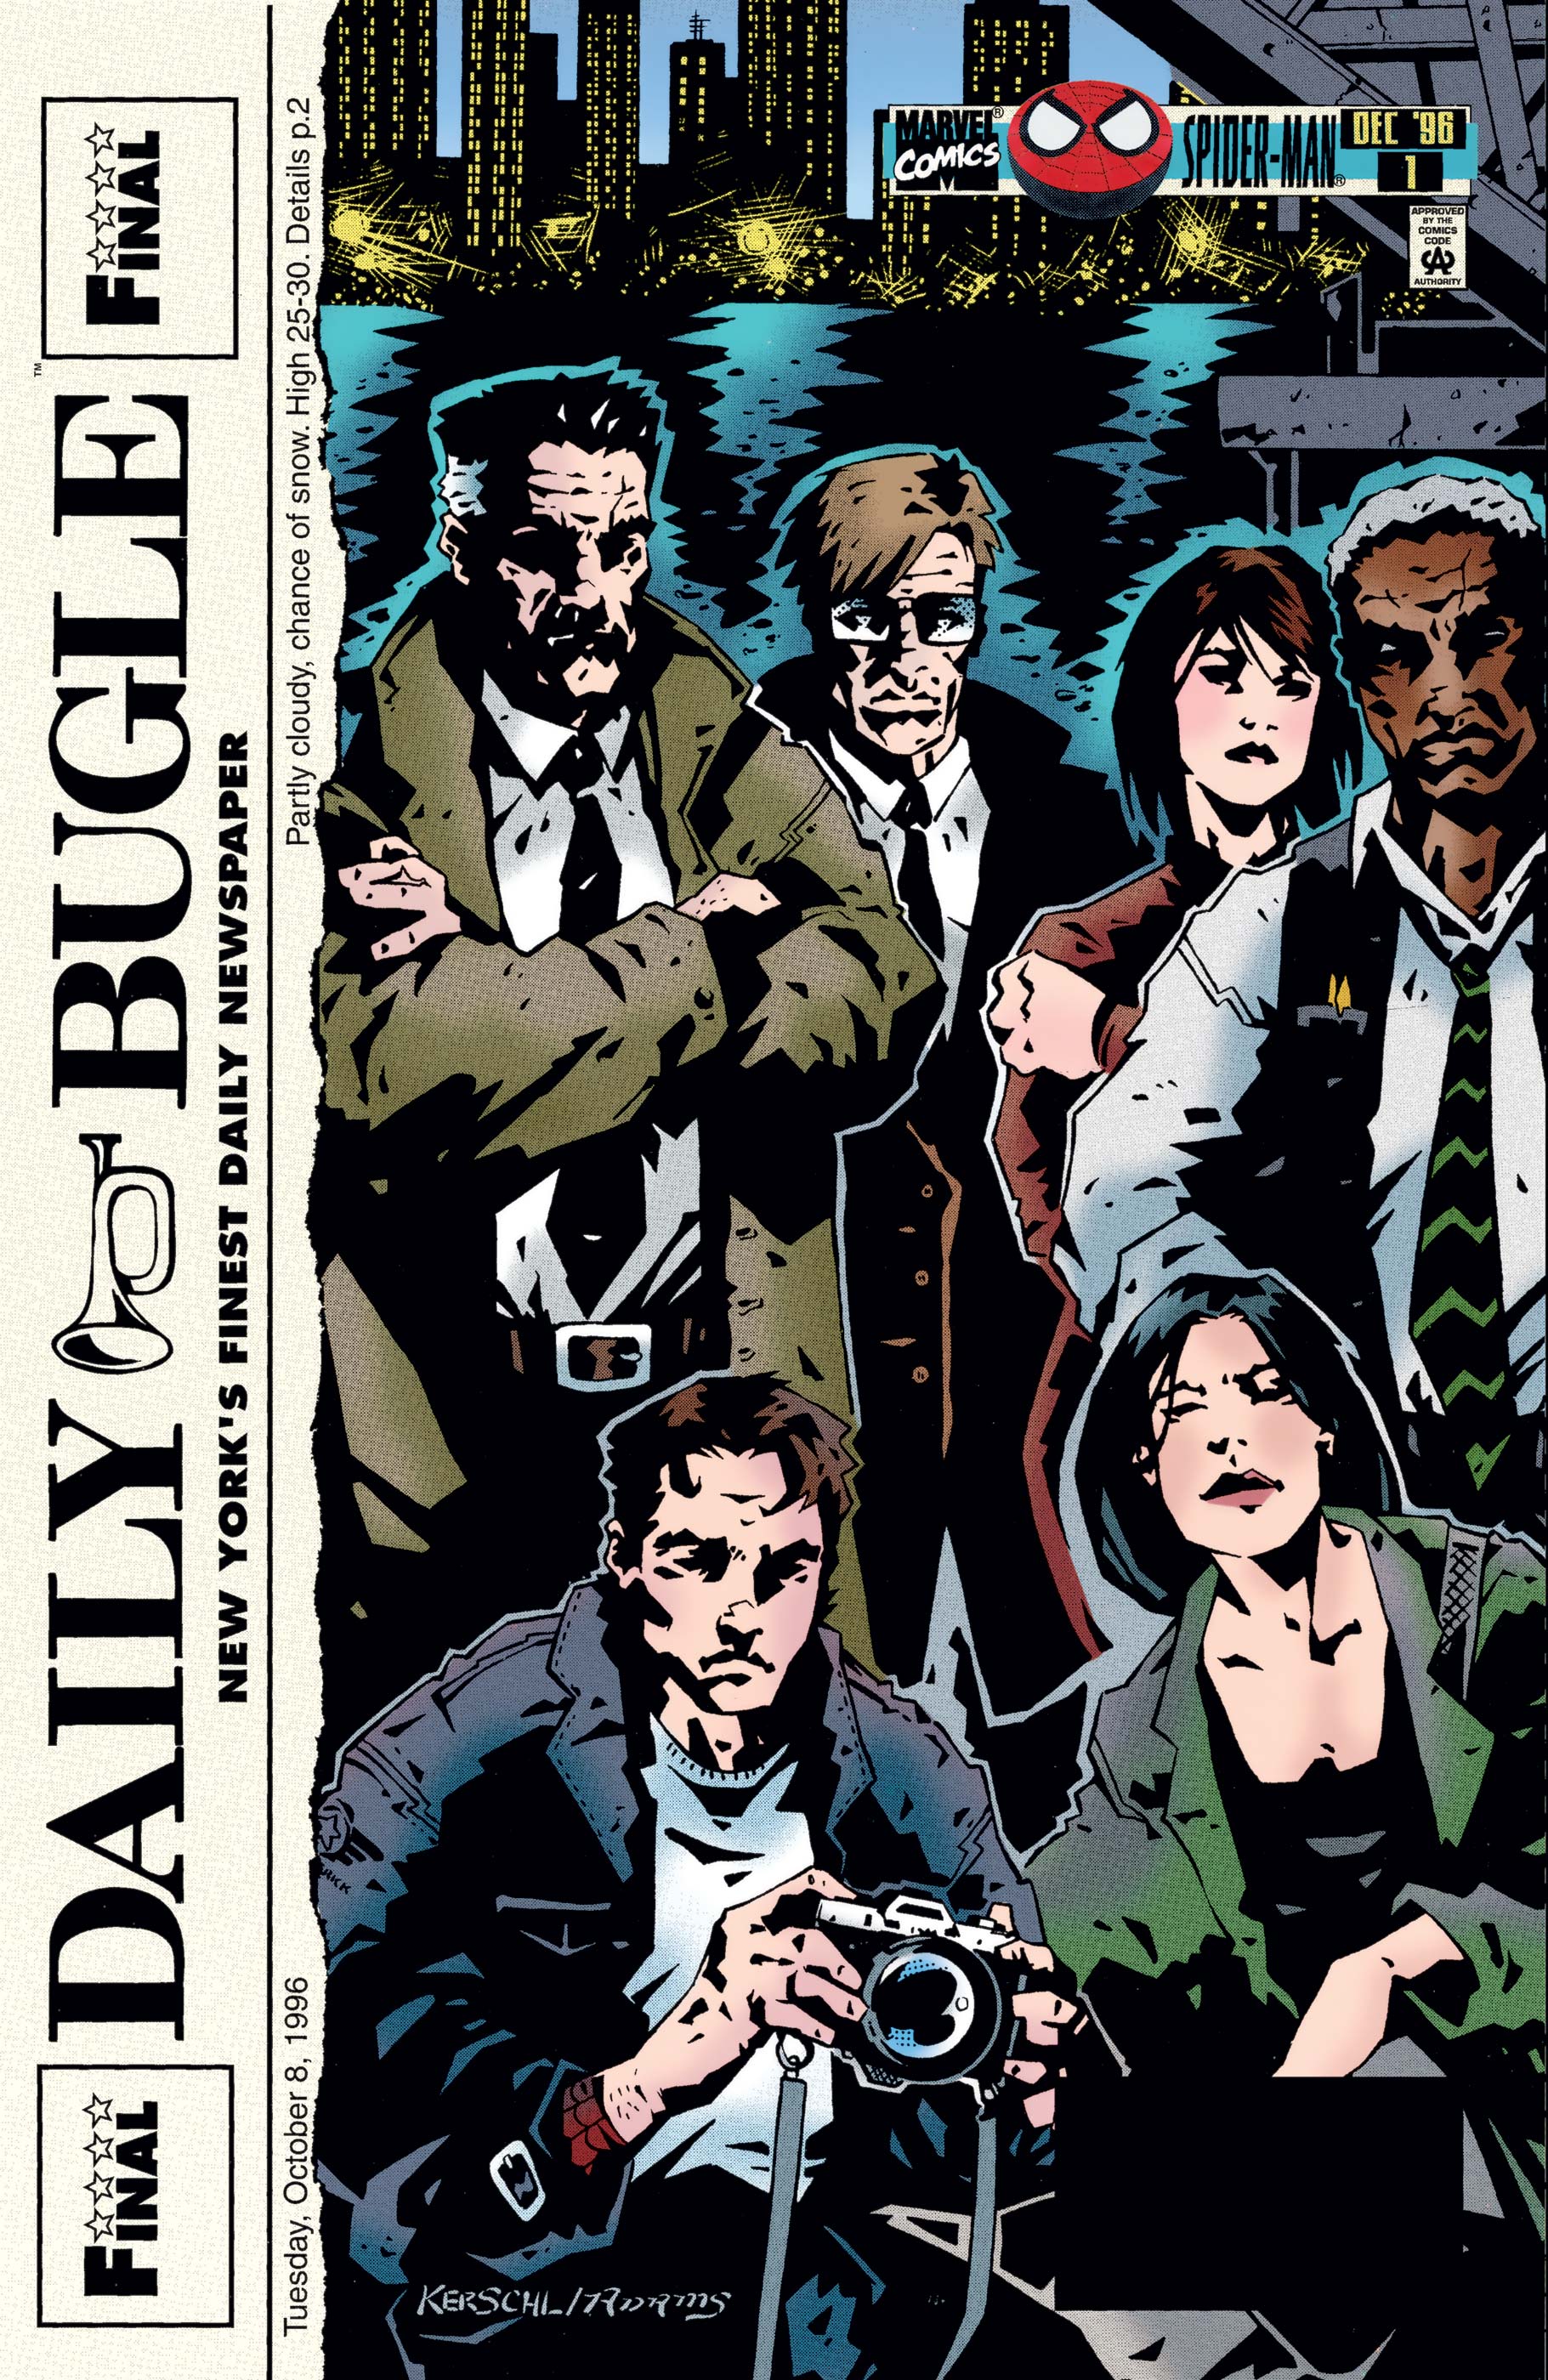 Daily Bugle (1996) #1